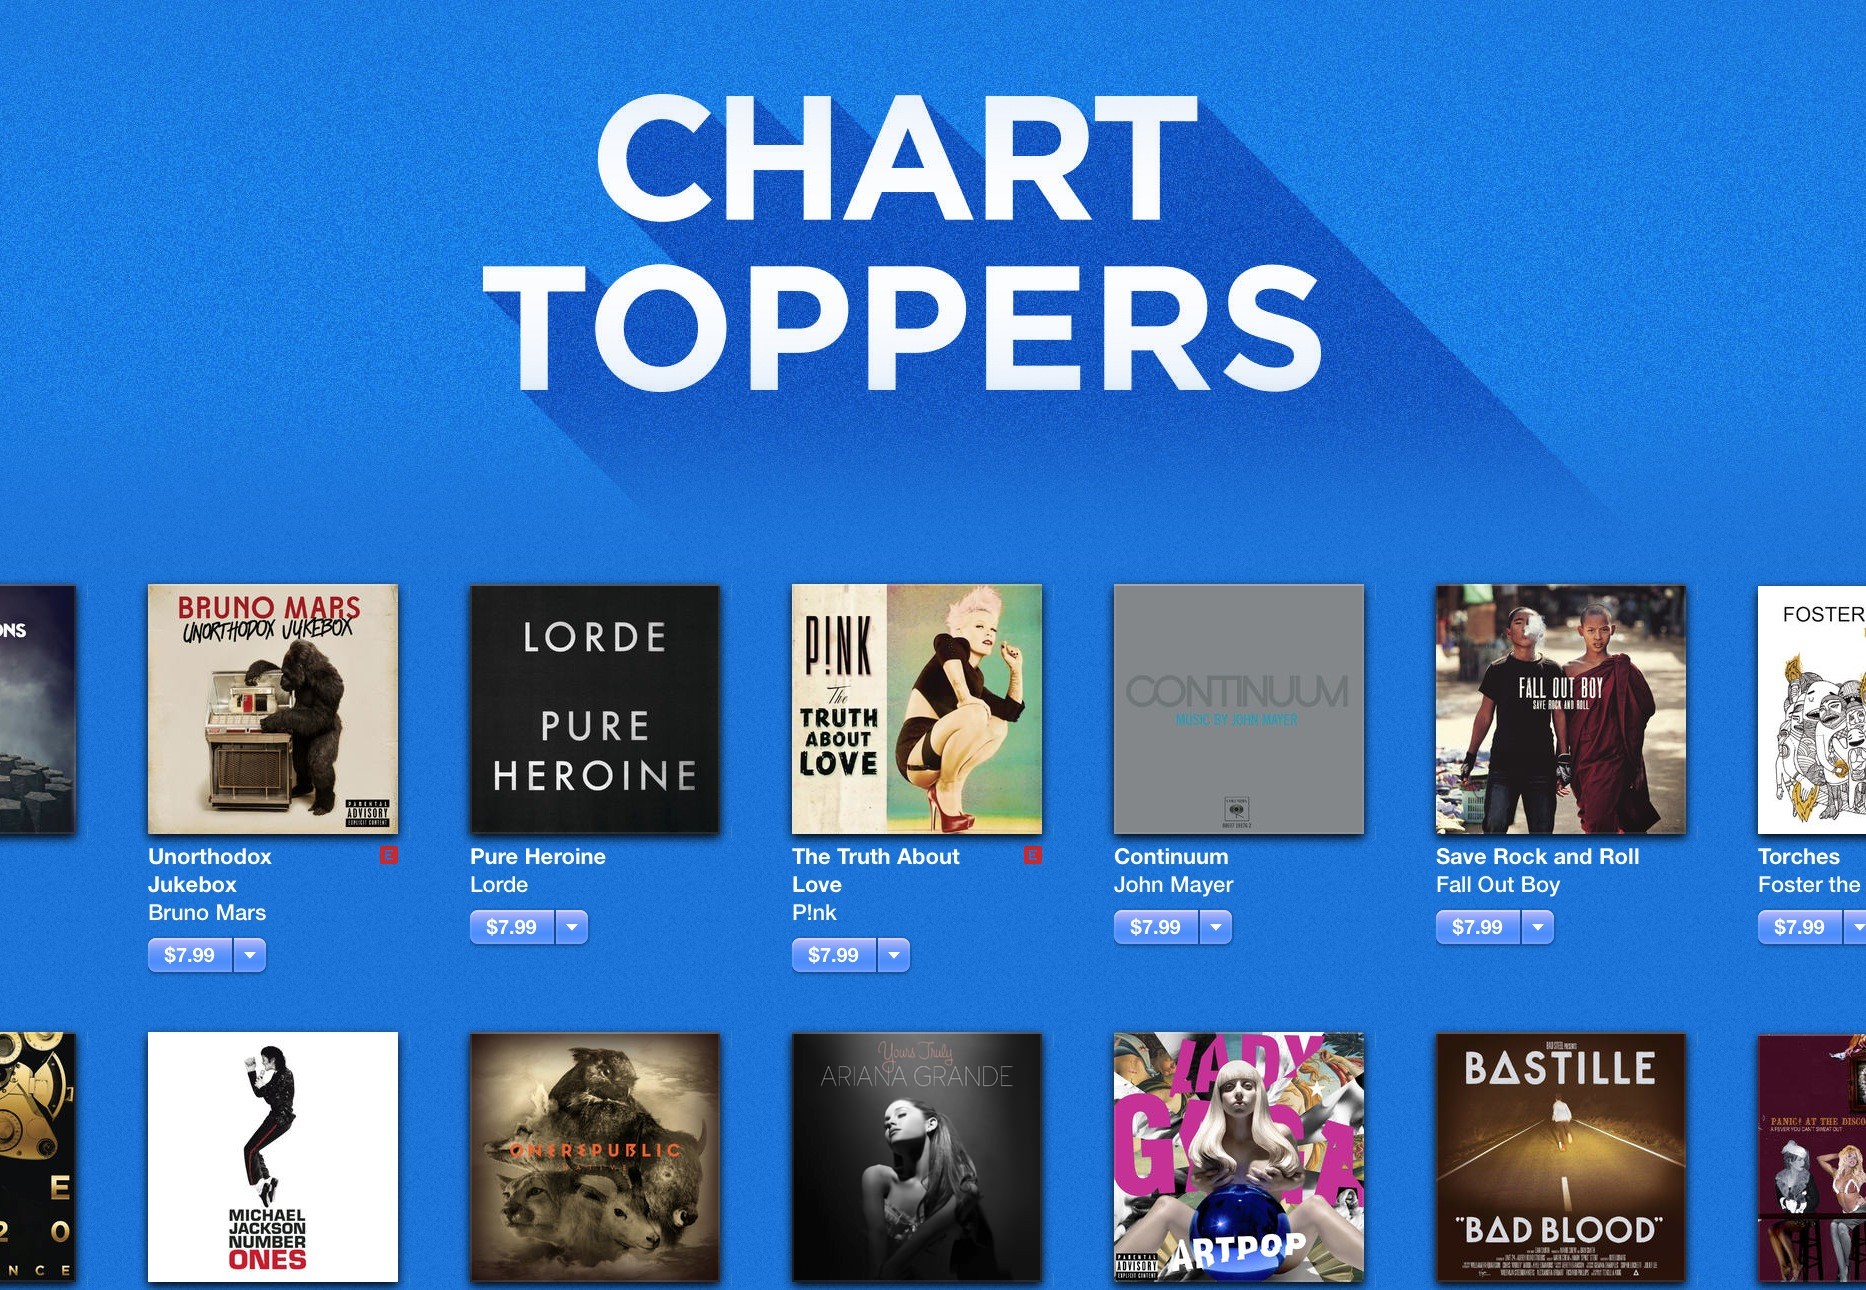 Itunes Australia Album Chart Top 100